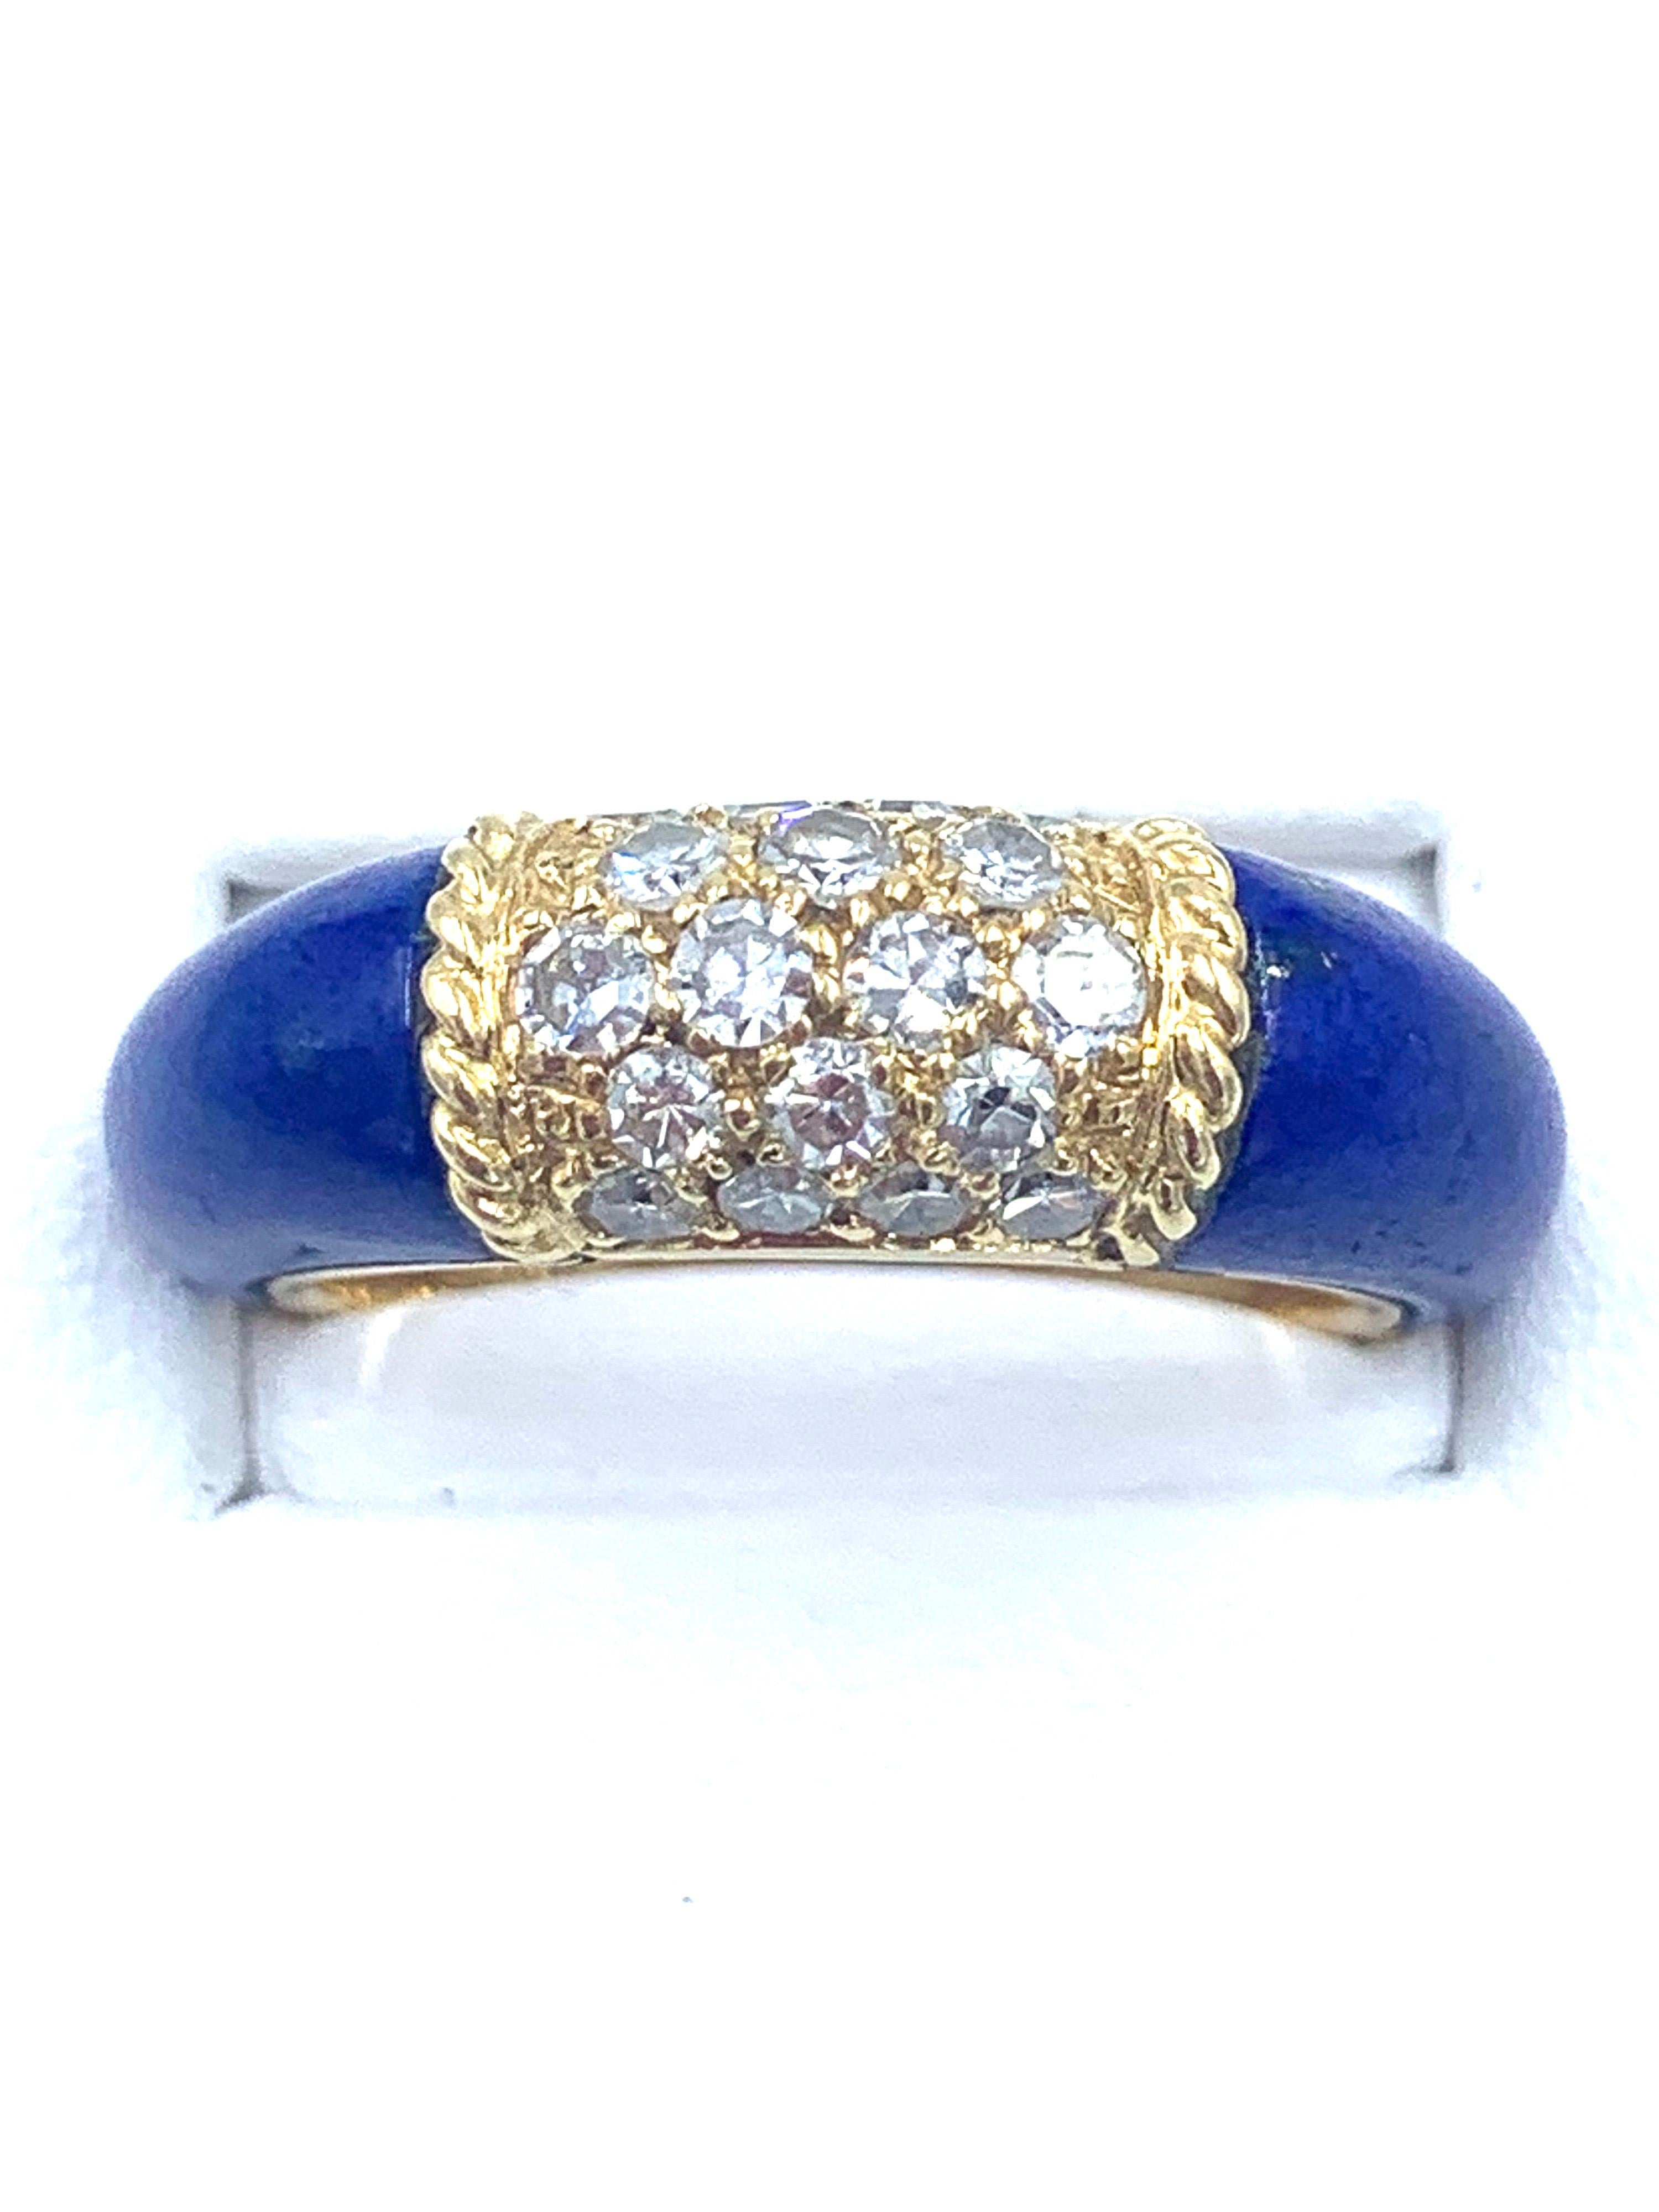 Van Cleef & Arpels Blue Lapis and Diamond Ring in 18 Karat Yellow Gold 2